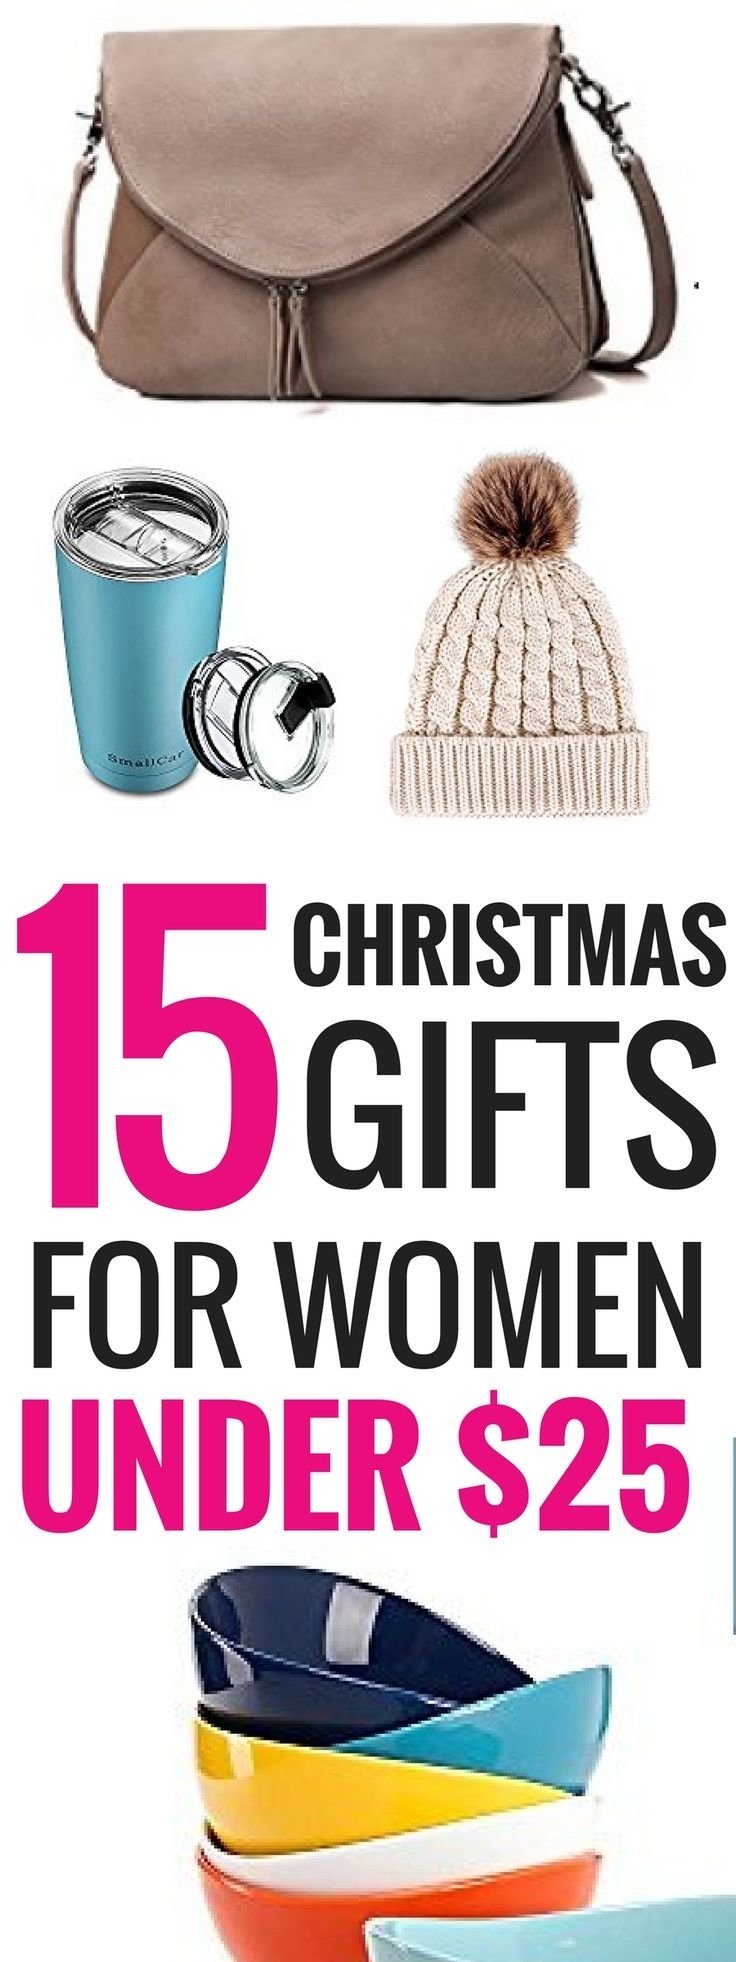 10 Elegant Christmas Gift Ideas For Sister In Law download gift ideas for sister in law christmas randyklein home design 1 2022